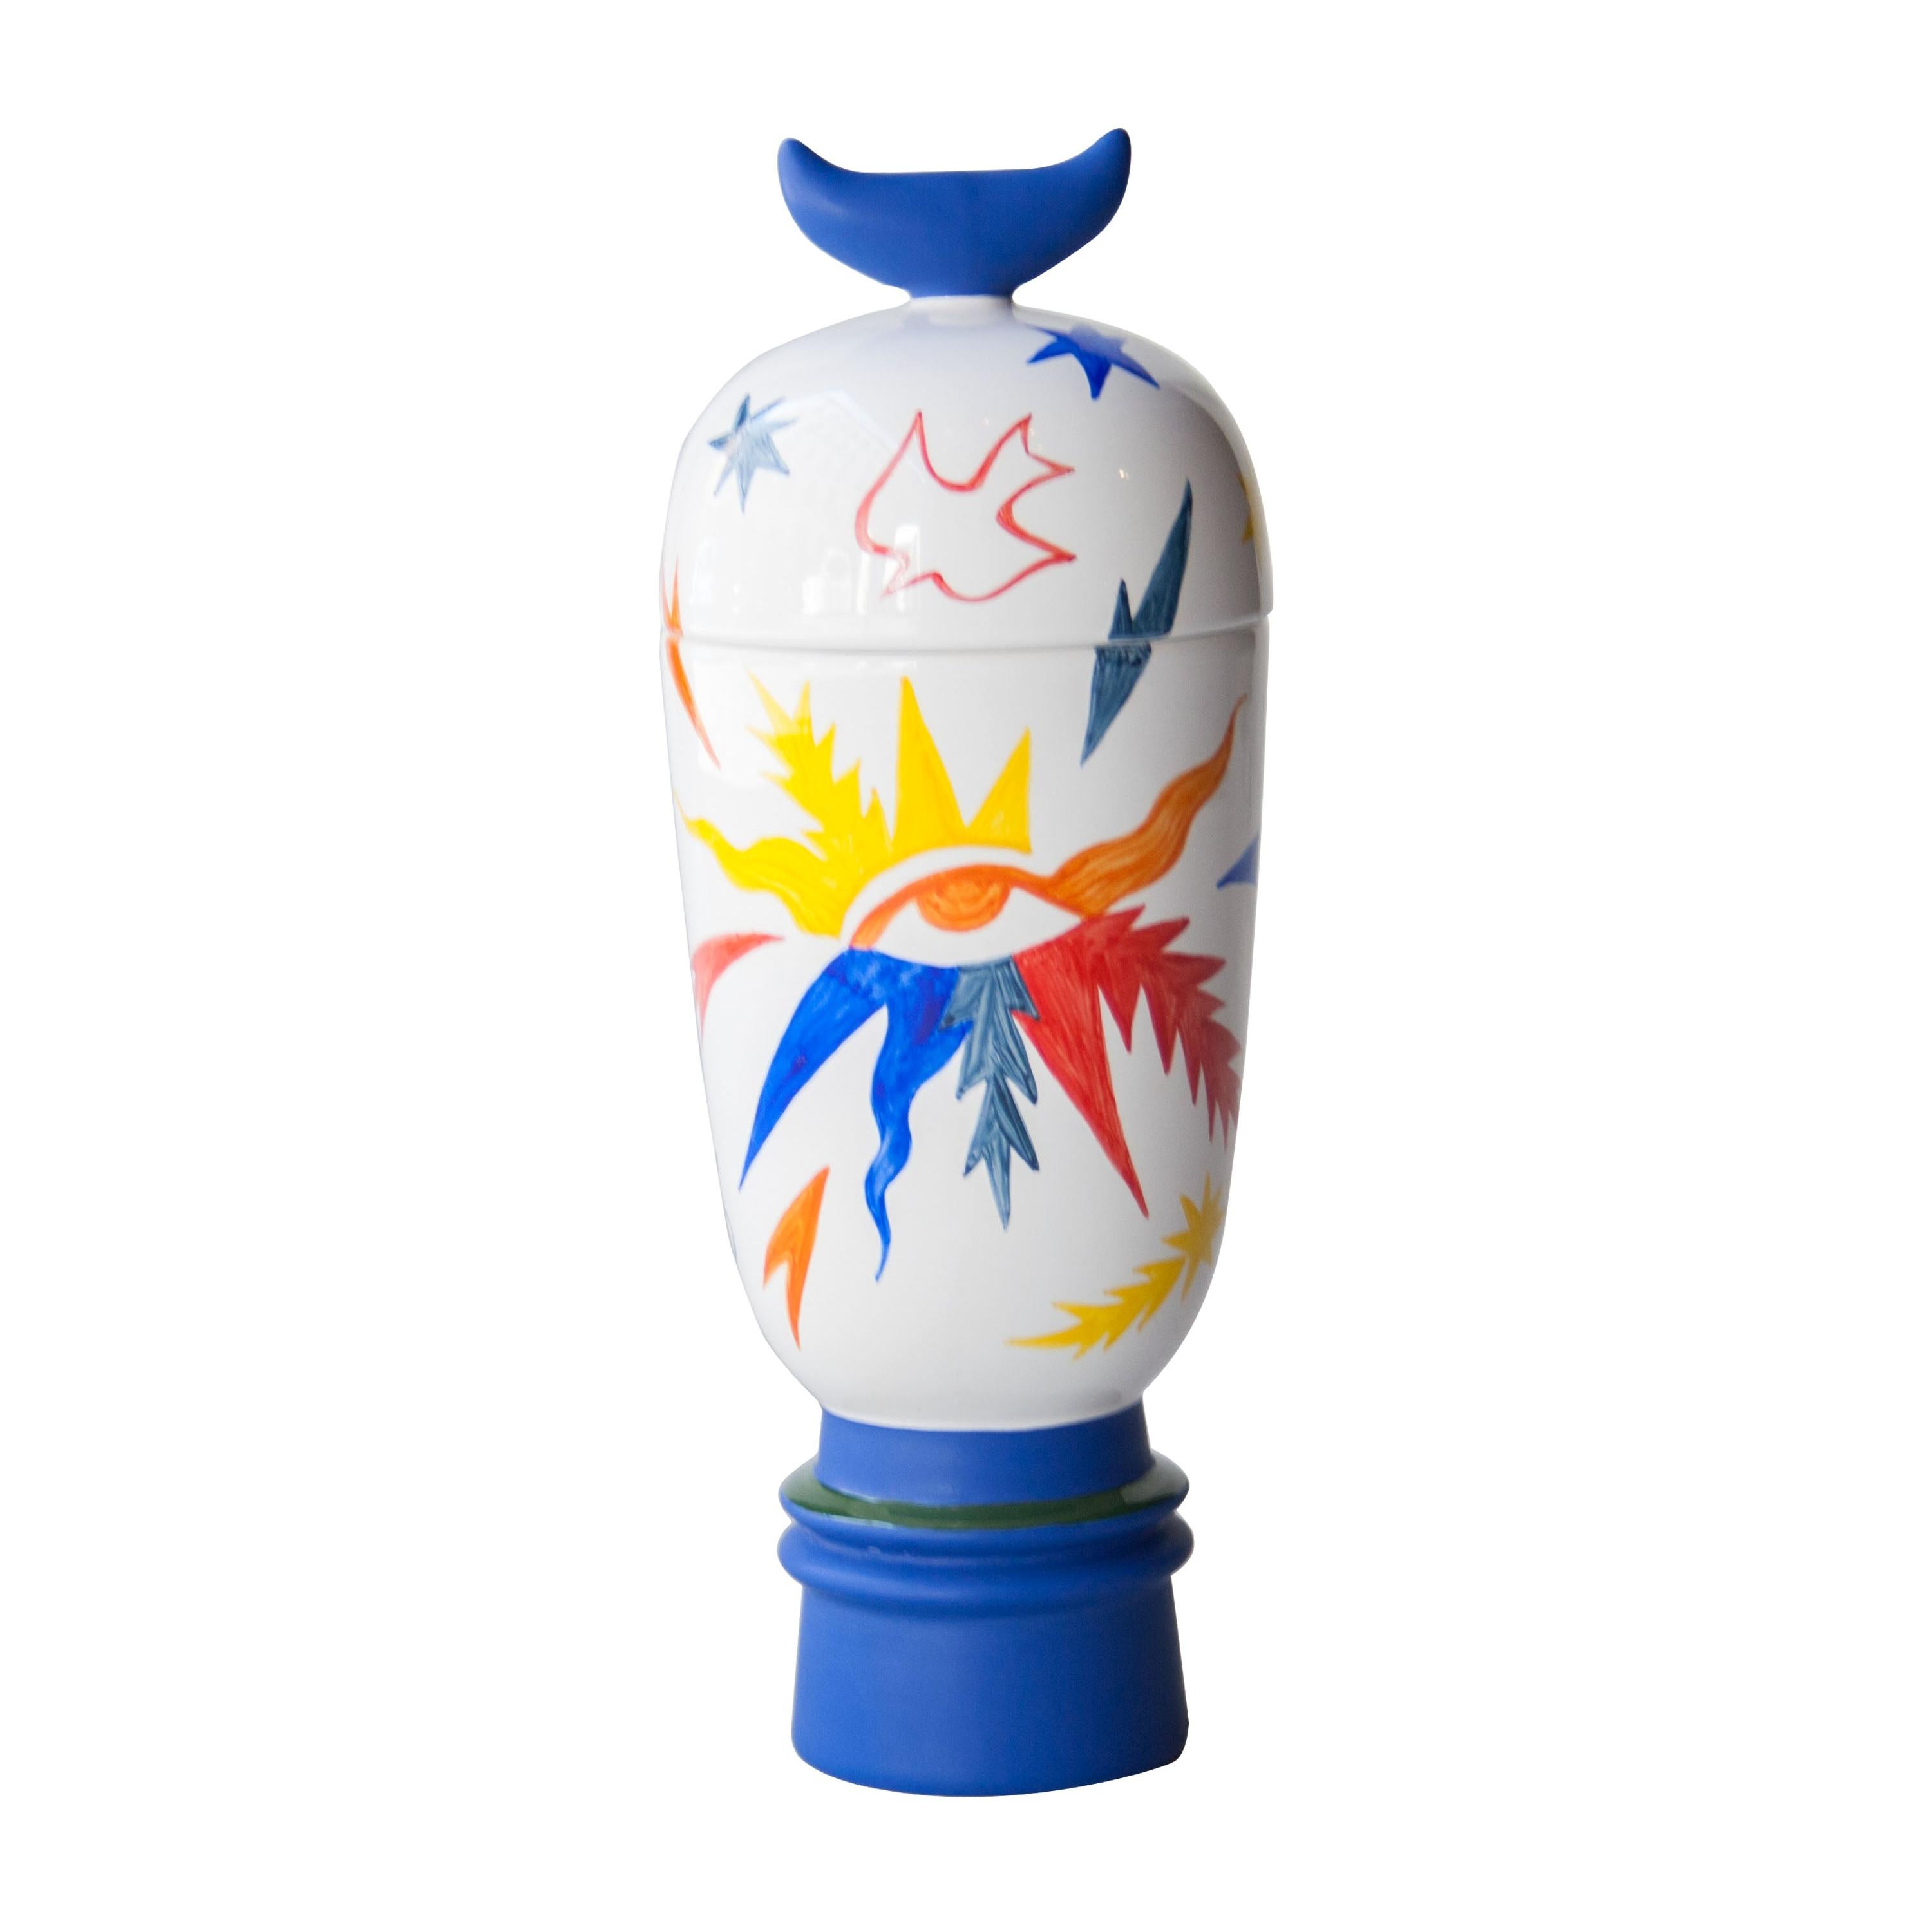 Gergei Pop Handmade White Blue Colored Ceramic Vase, Spain, 2020